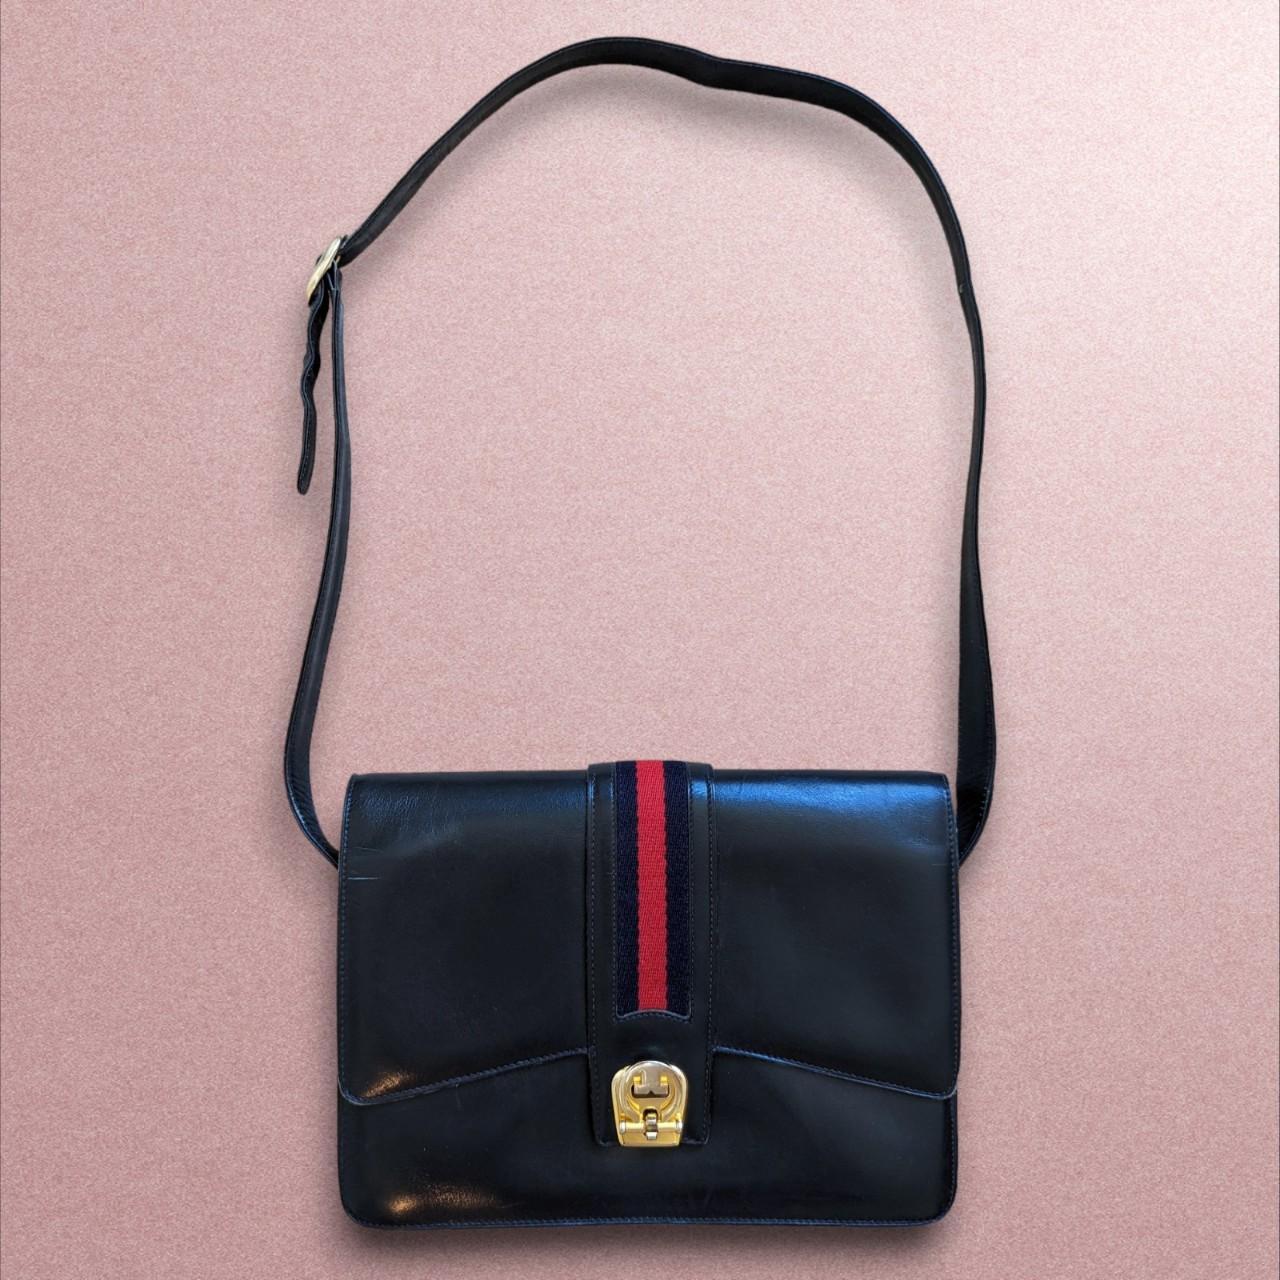 Gucci, Bags, Authentic Vintage Gucci Patent Leather Bag